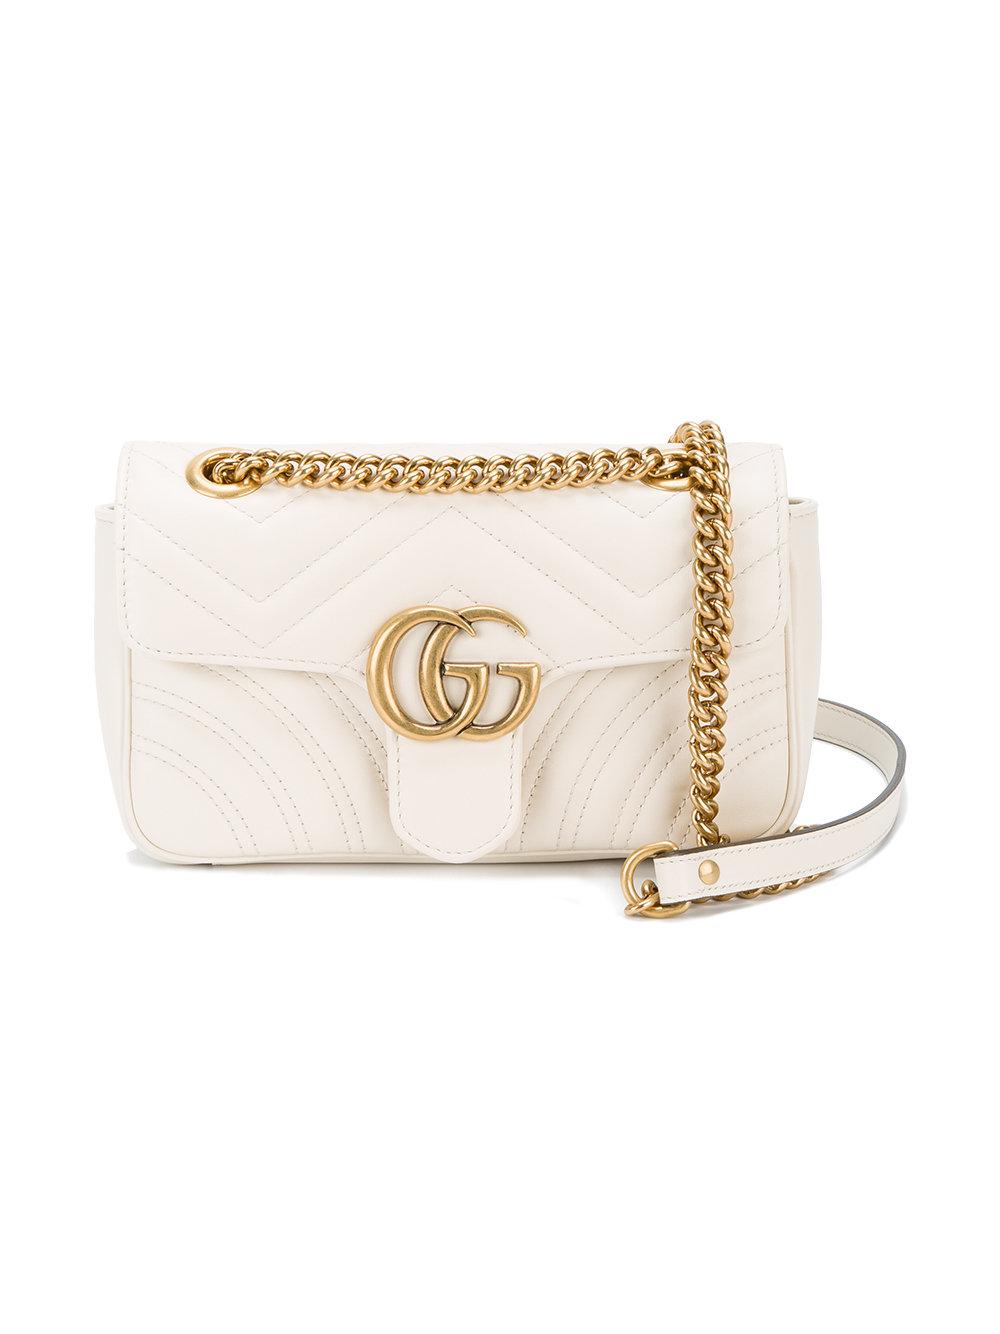 Gucci Mini Marmont Logo Bag in White | Lyst